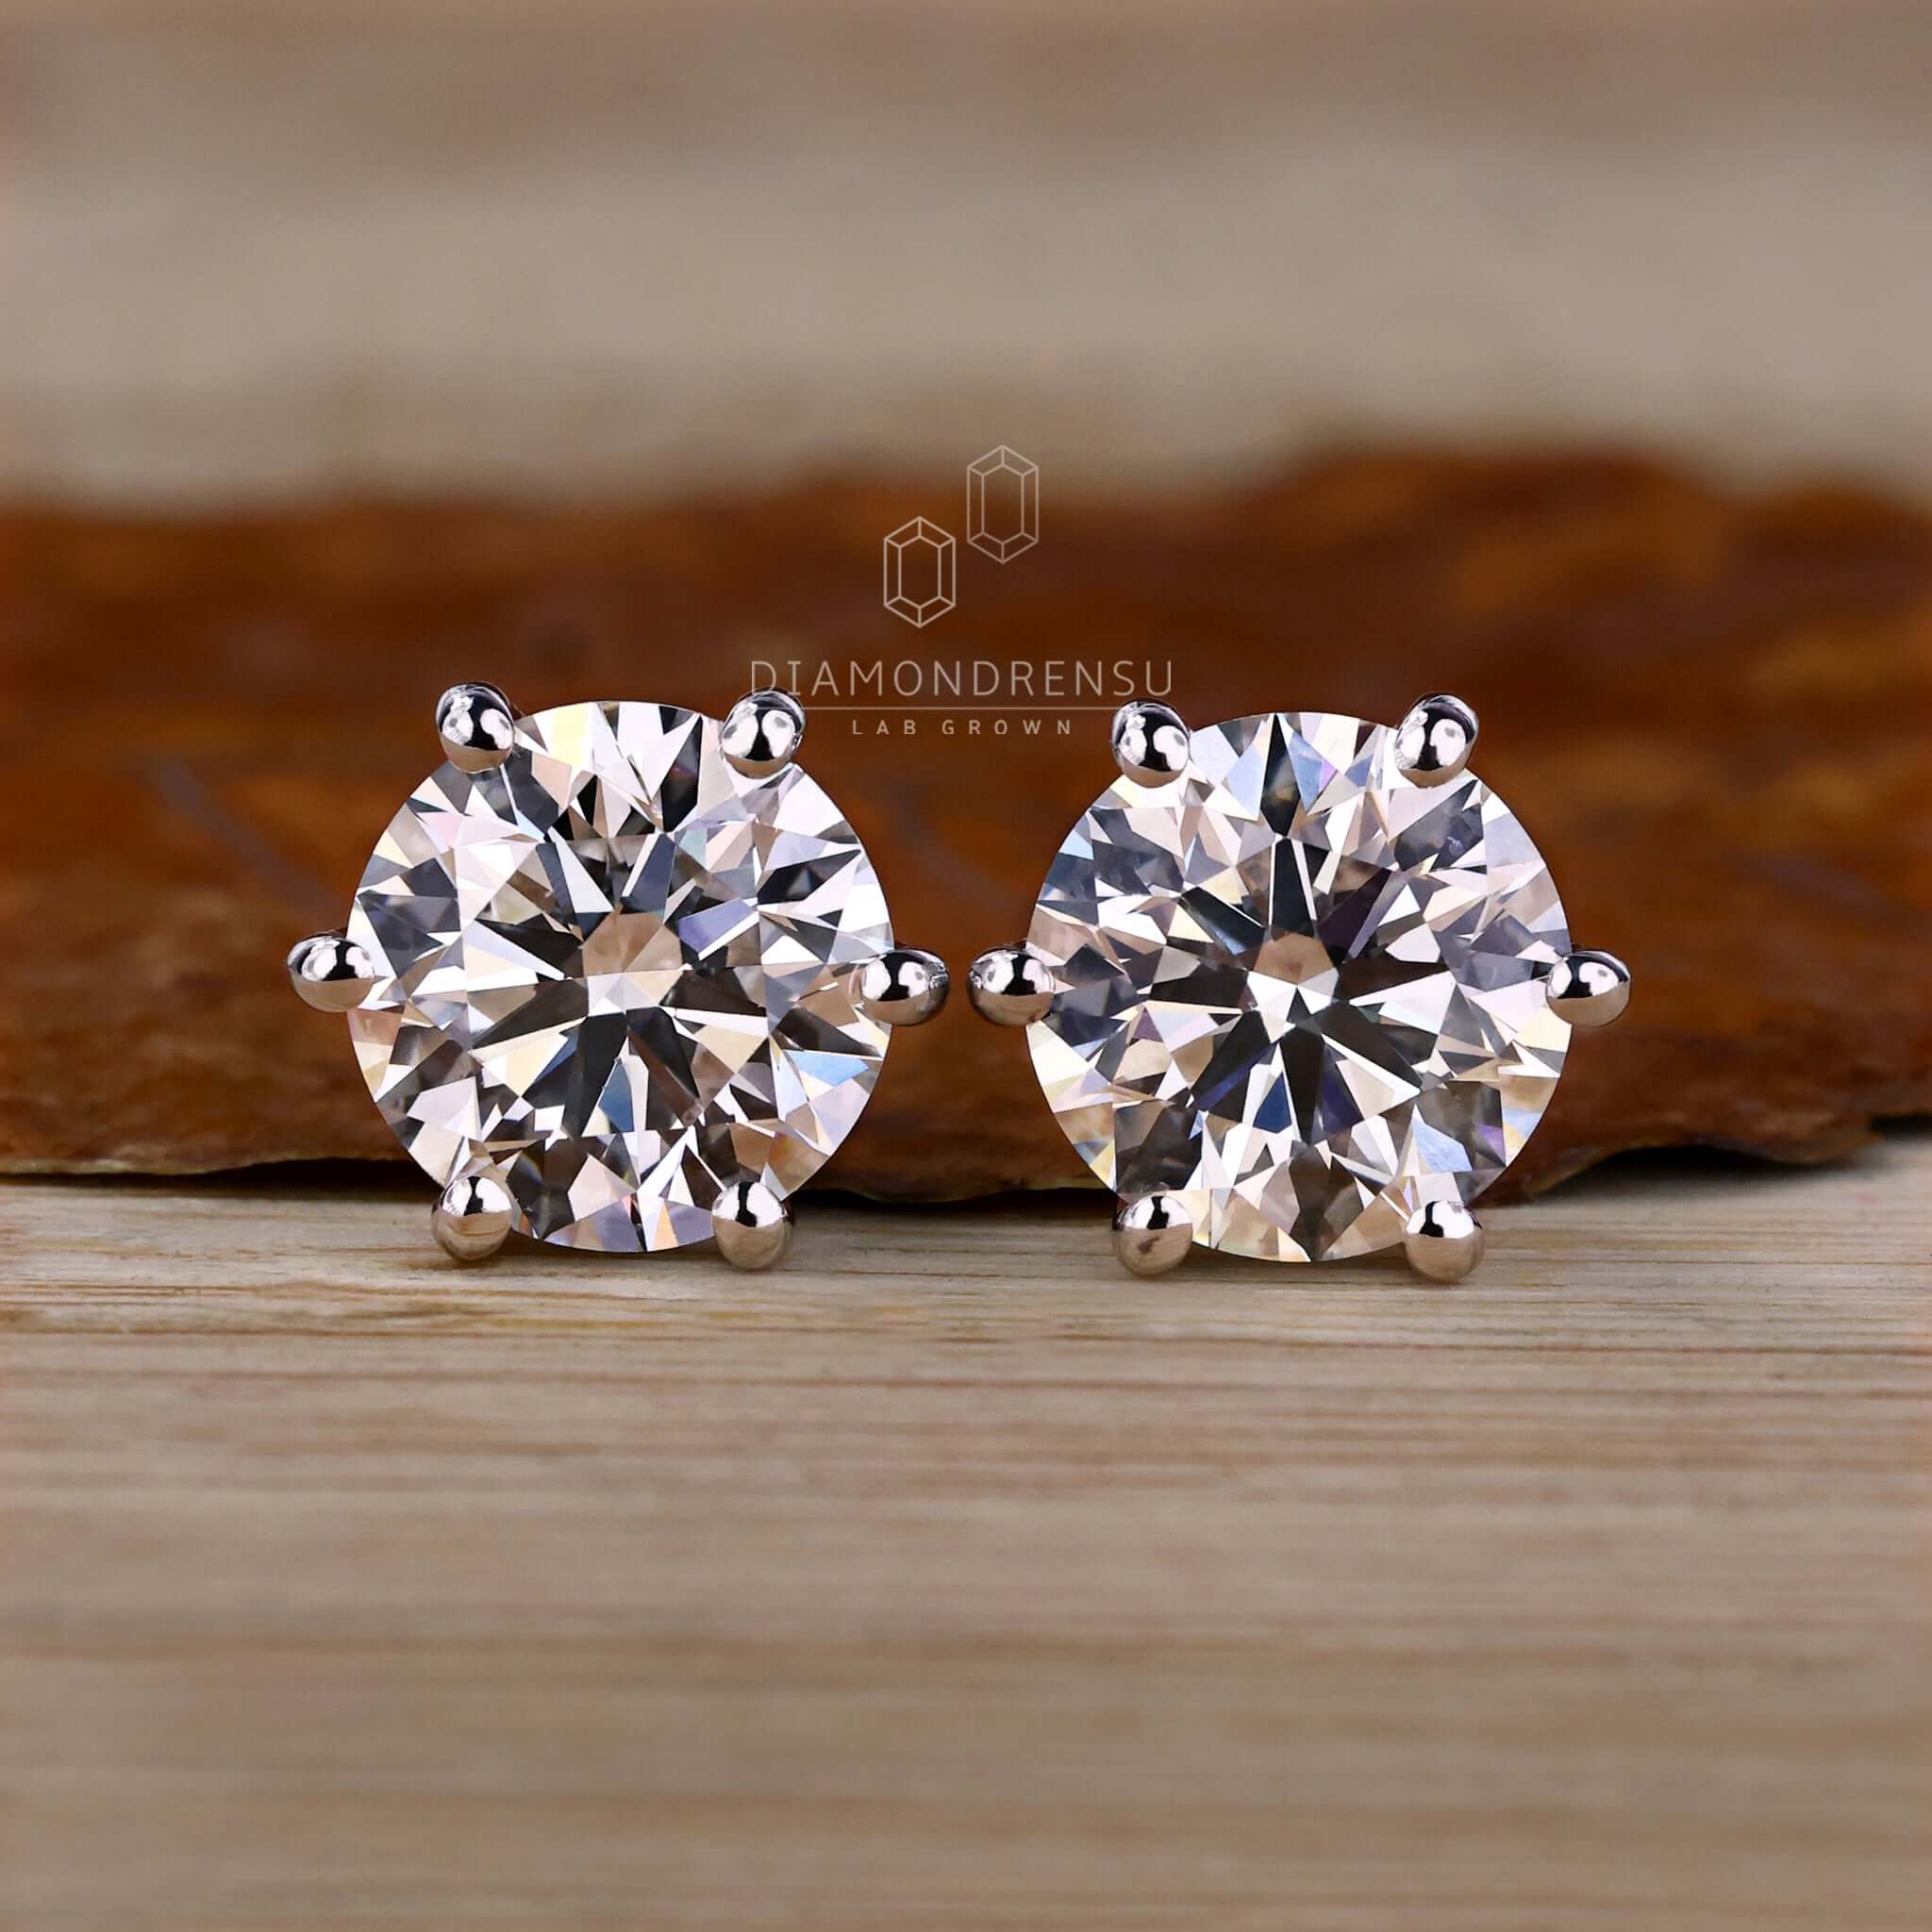 Allen Lab Grown Diamond Earrings -14K White Gold, Solitaire, 3 Carat, –  Best Brilliance